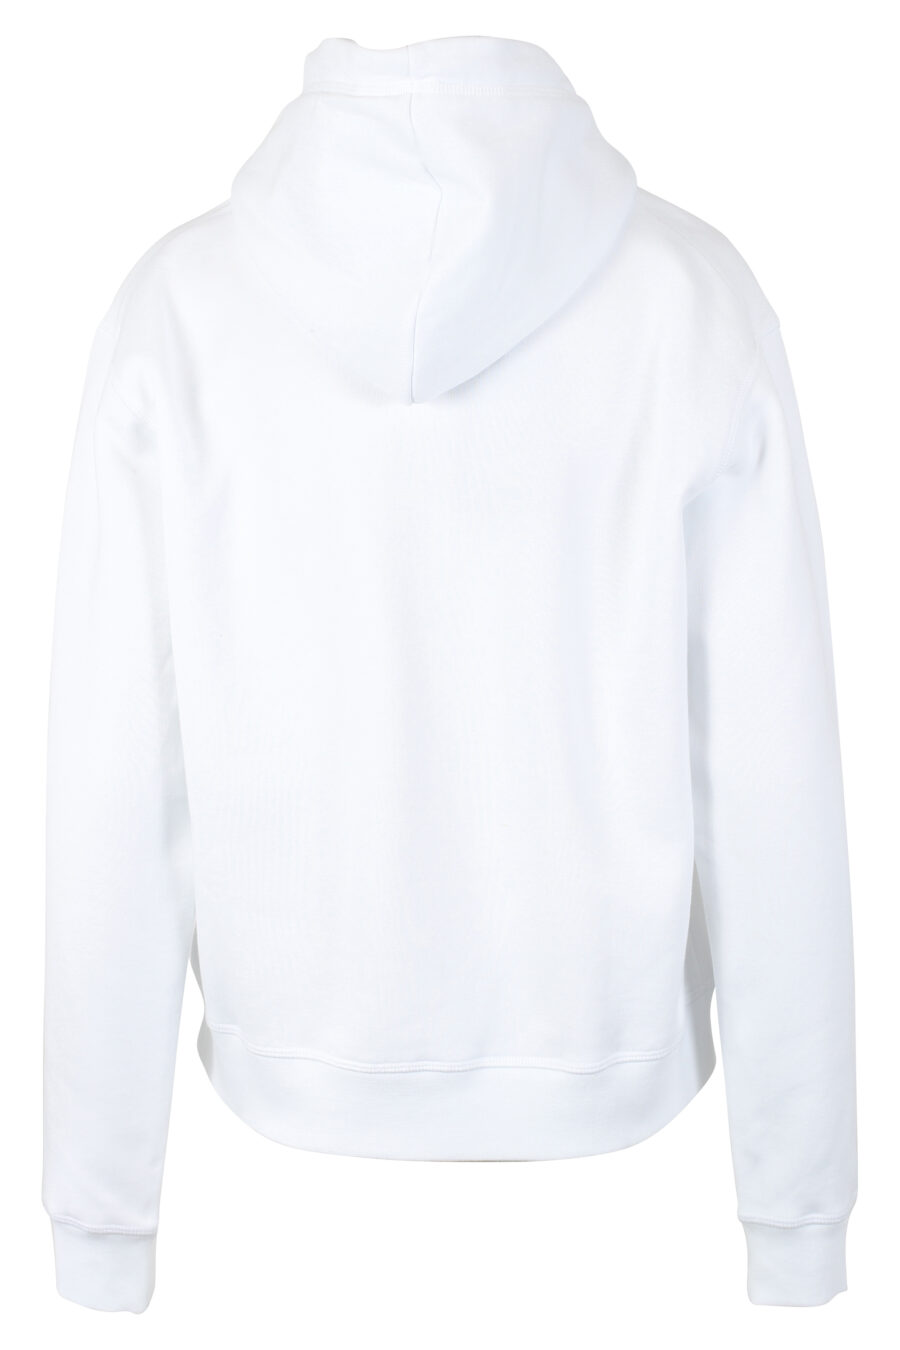 White hooded sweatshirt with "icon" logo and surfer dog - IMG 9790